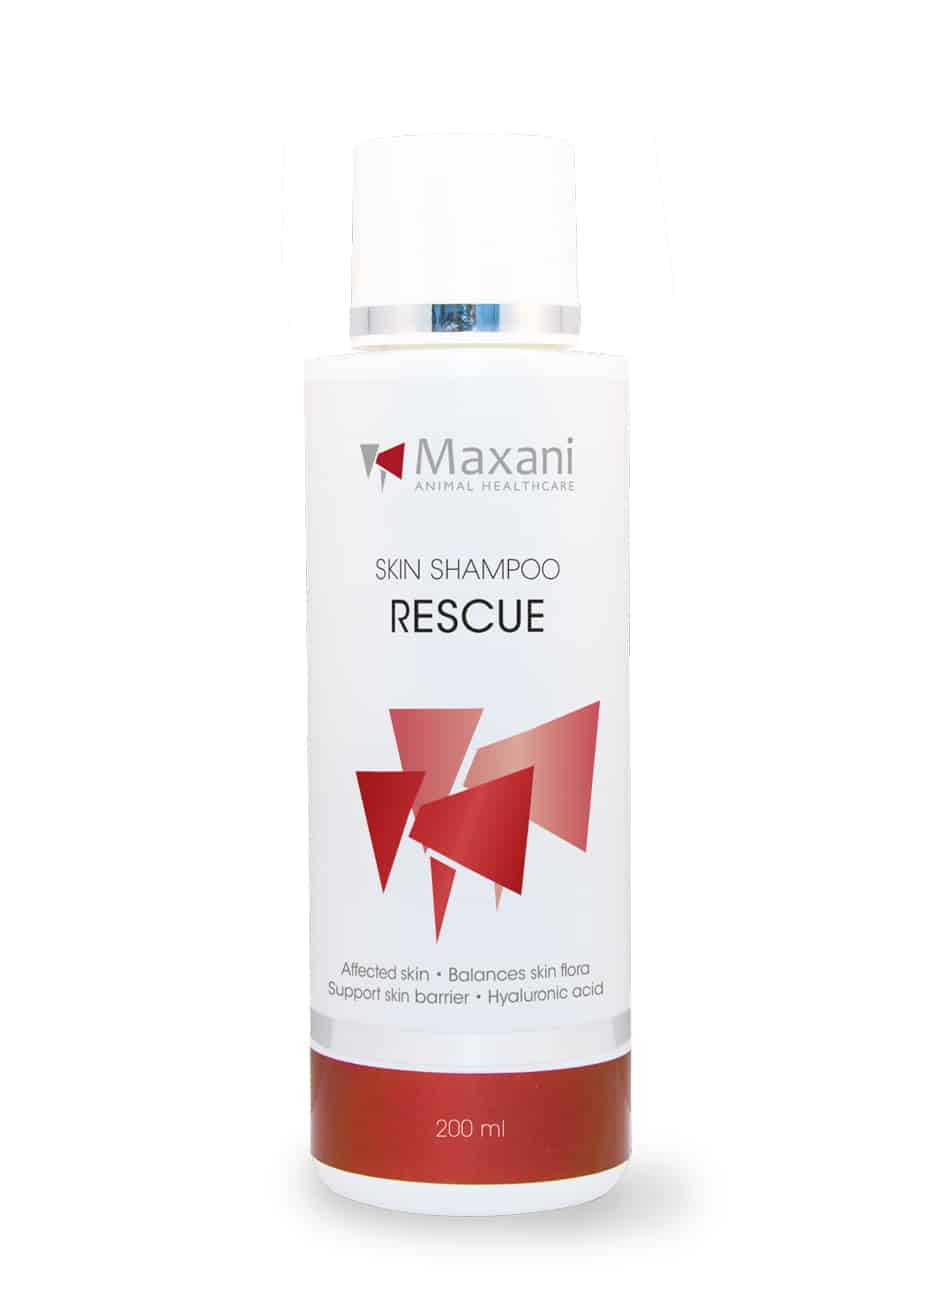 Maxani Rescue shampoo kopen? en betrouwbaar